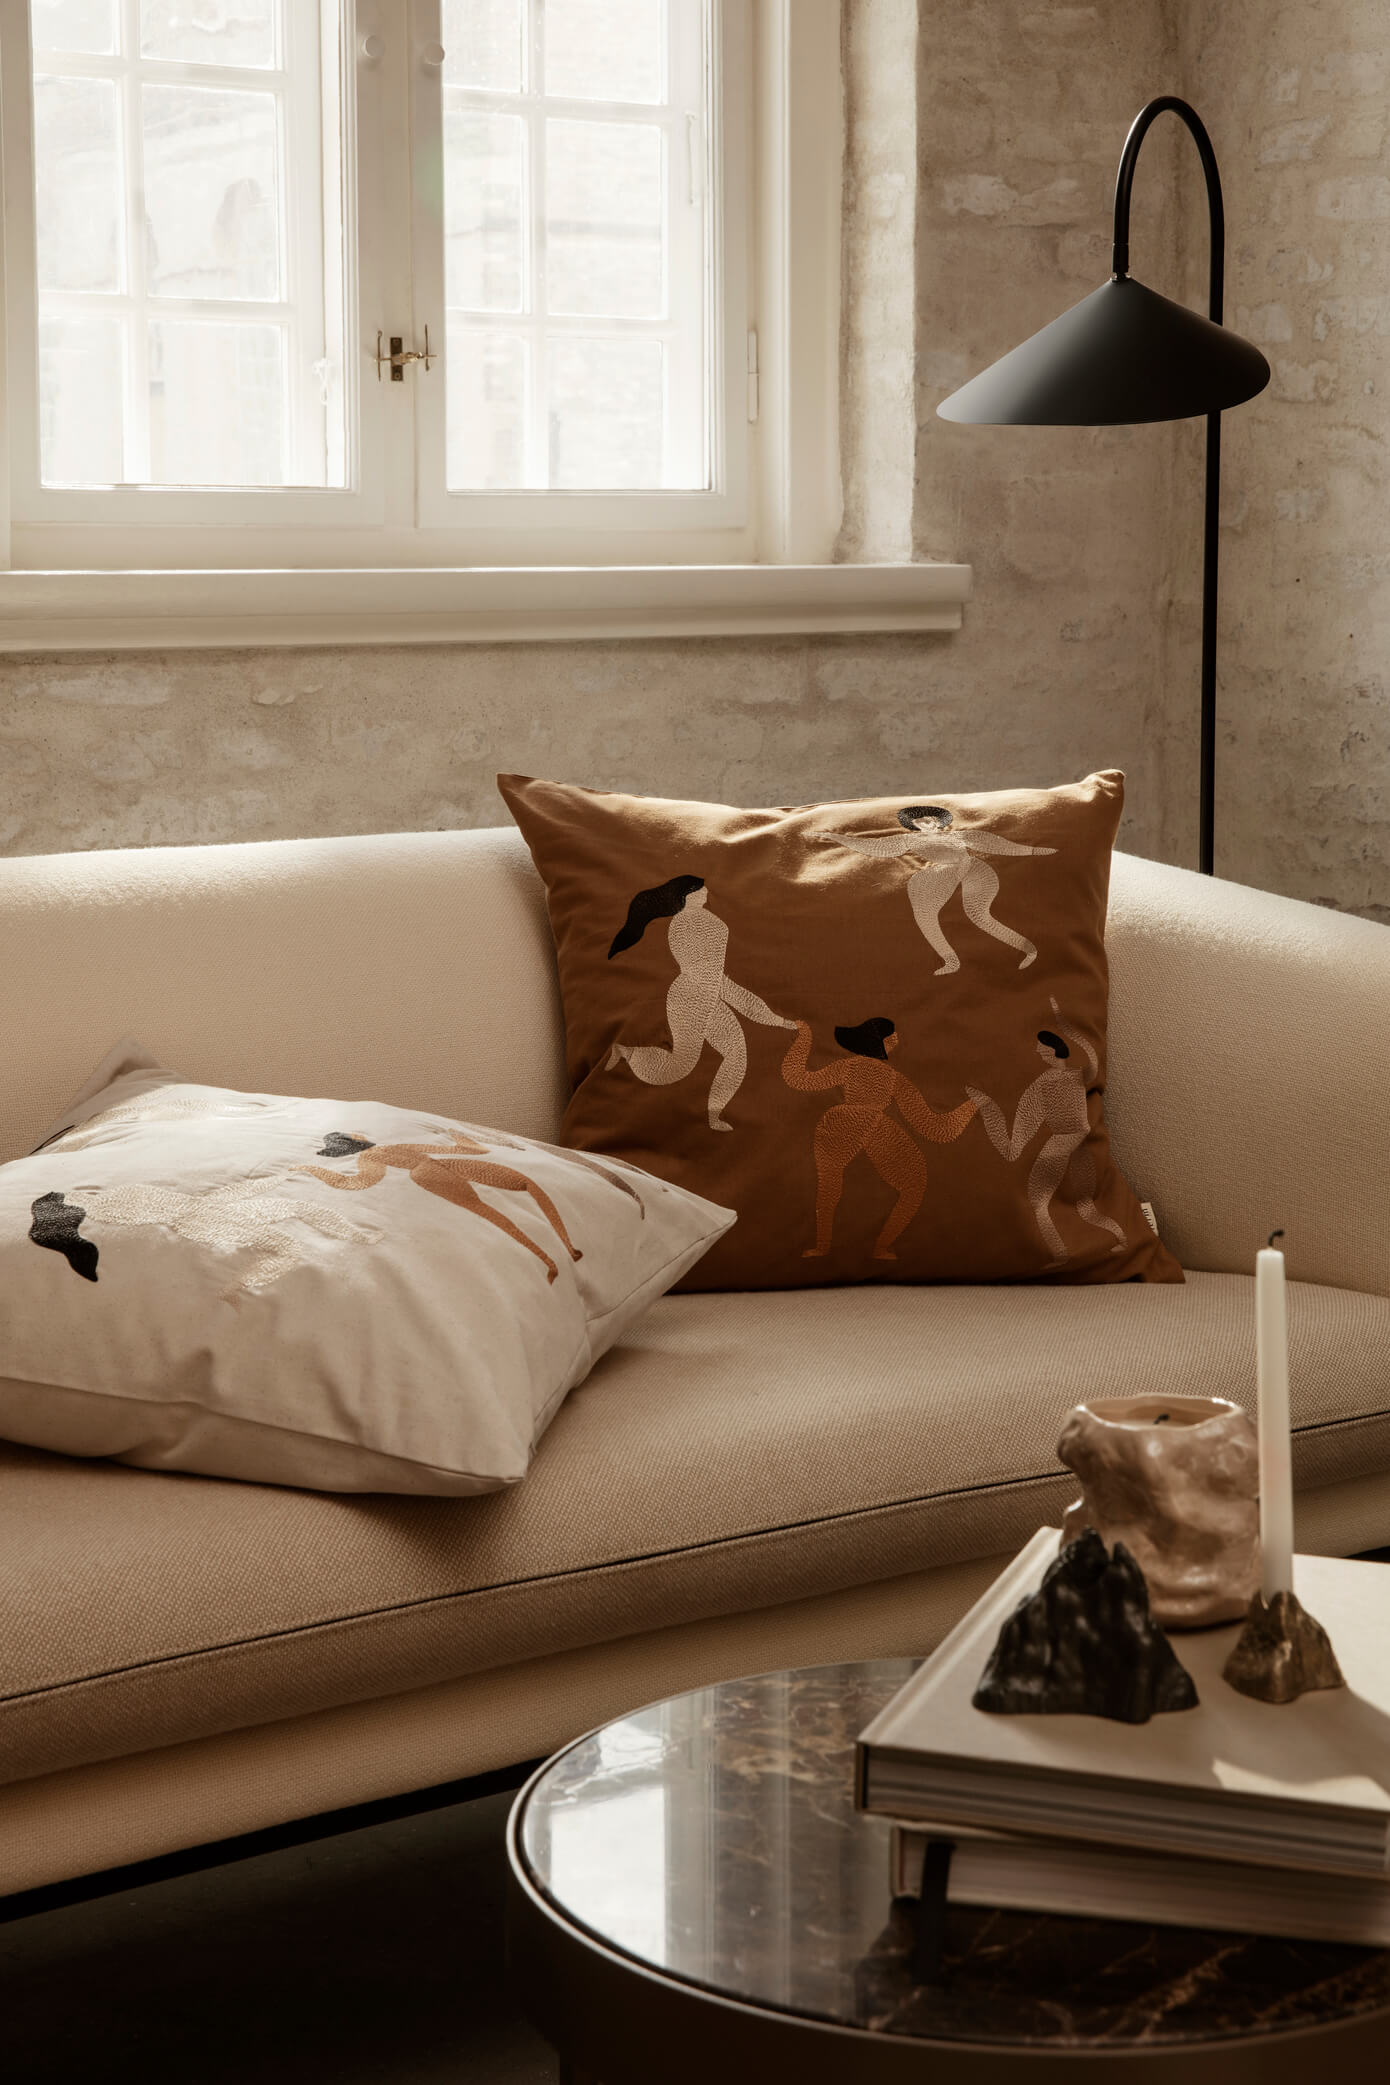 Turn Sofa | 3 Seater | Bouclé Fabric | Various Colours | by ferm Living - Lifestory - ferm Living